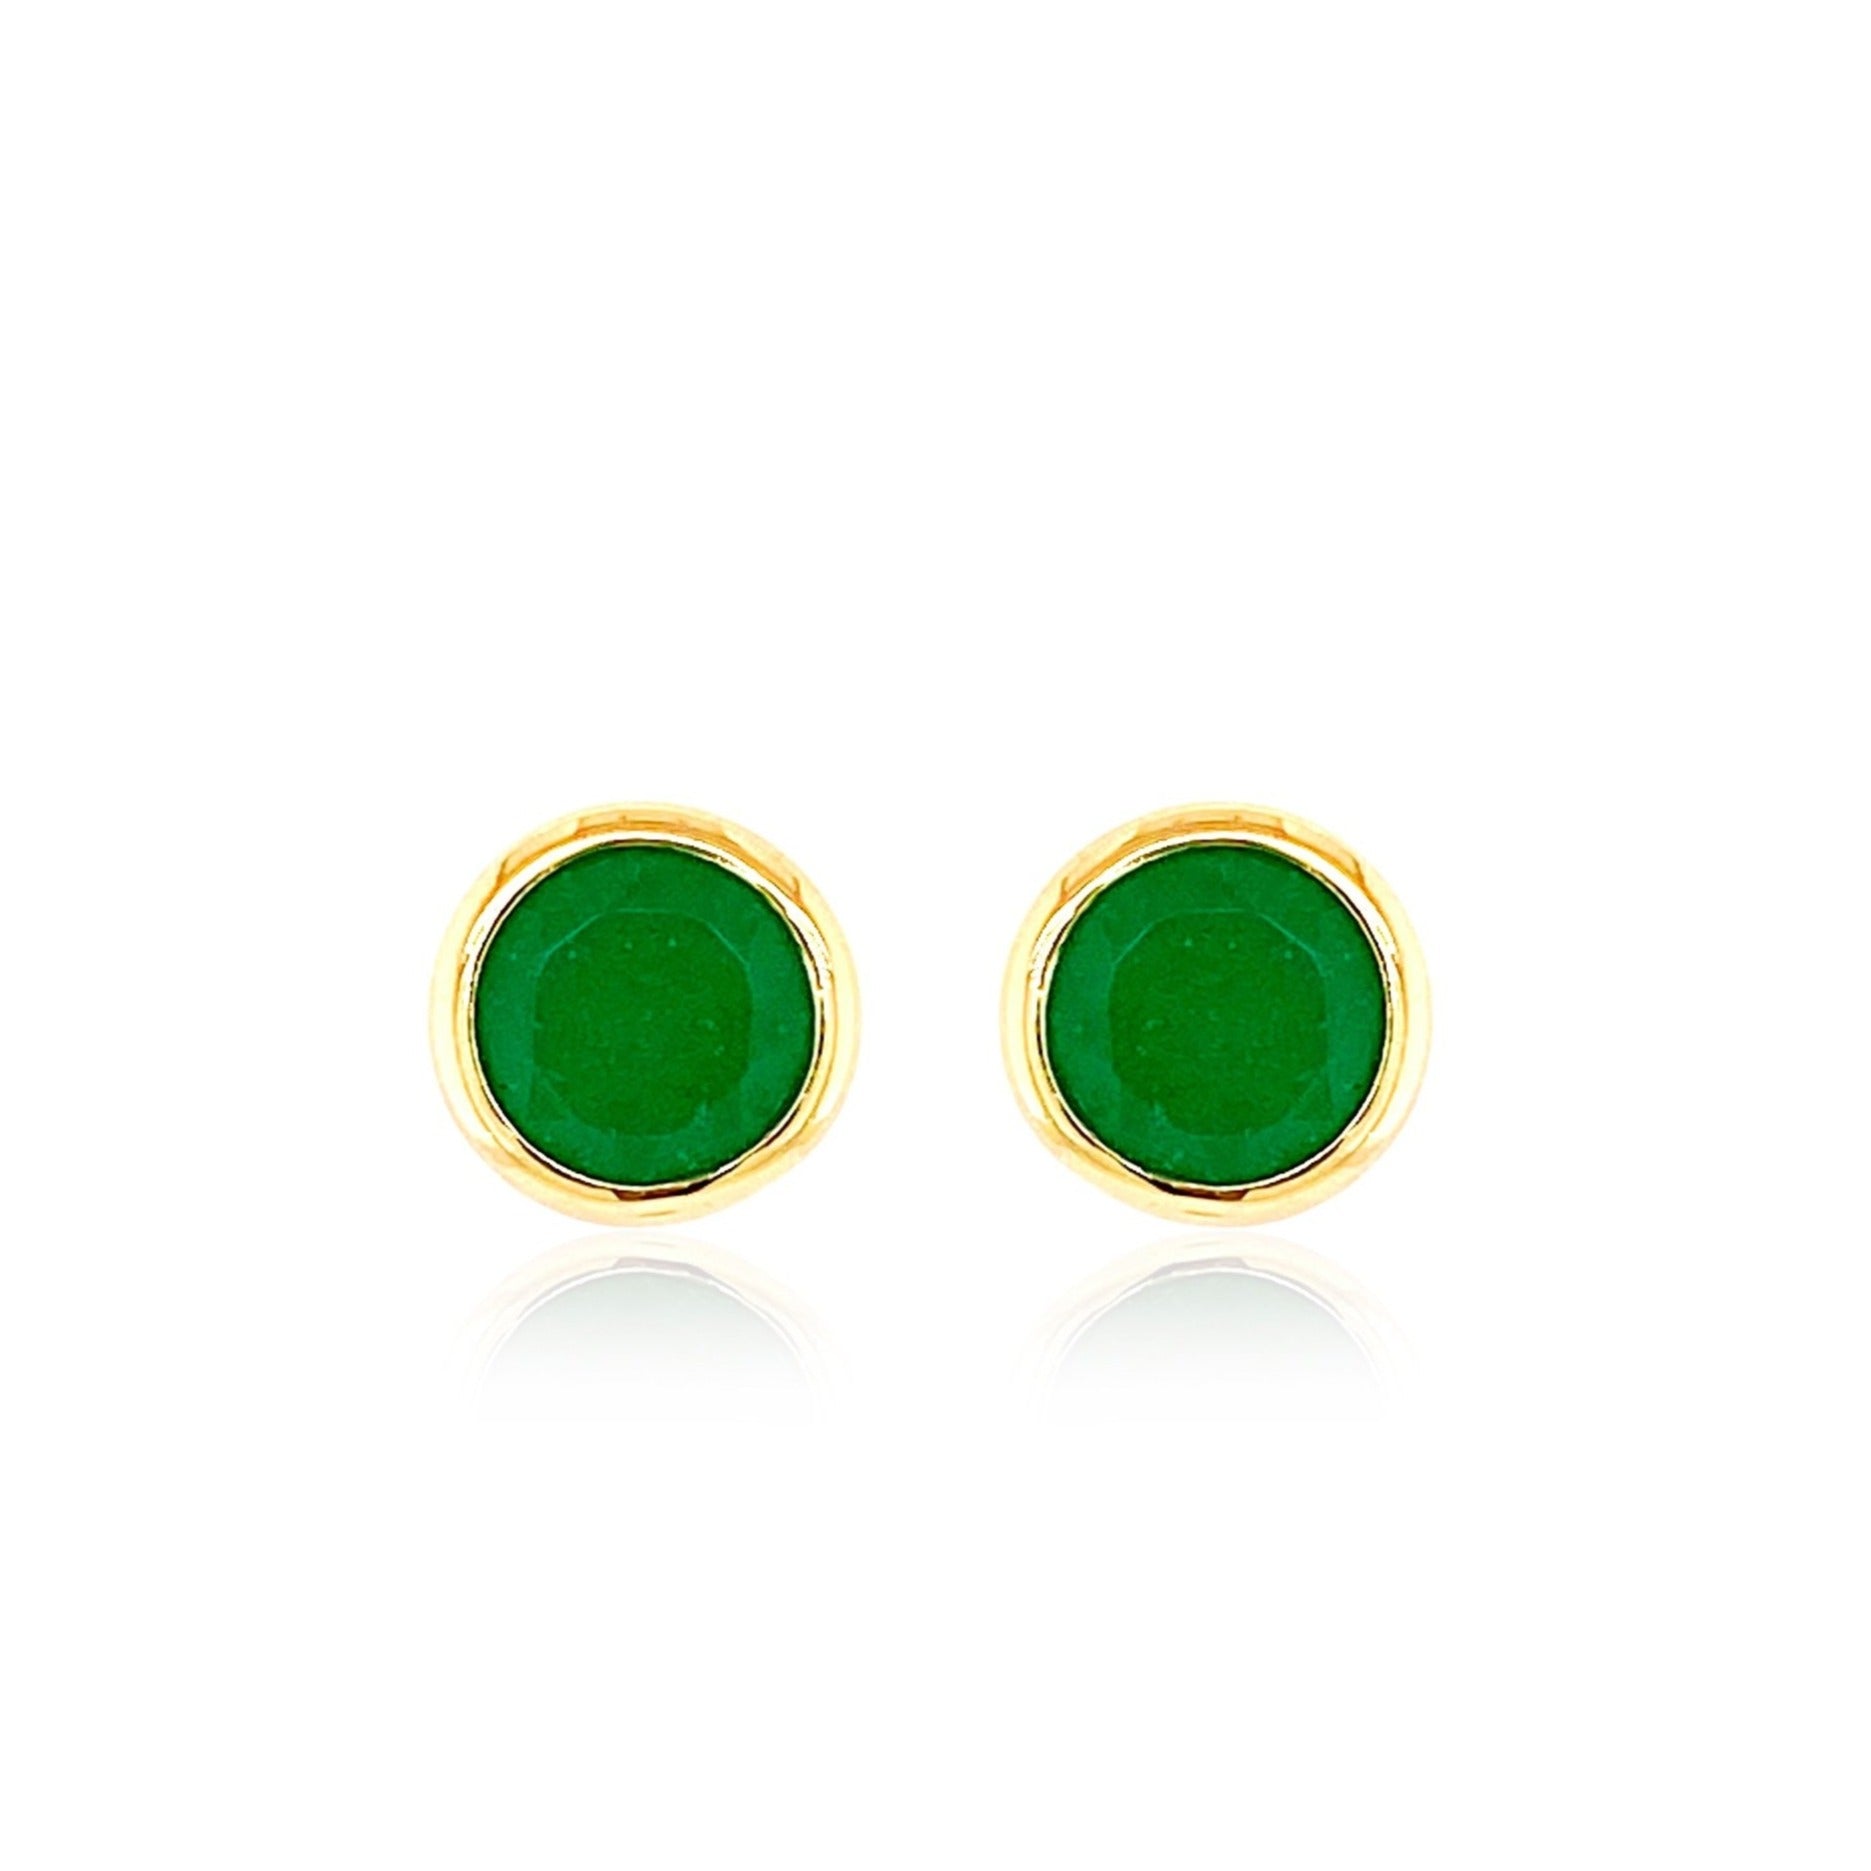 SIGNATURE Earrings (1287) - Green Quartz / YG